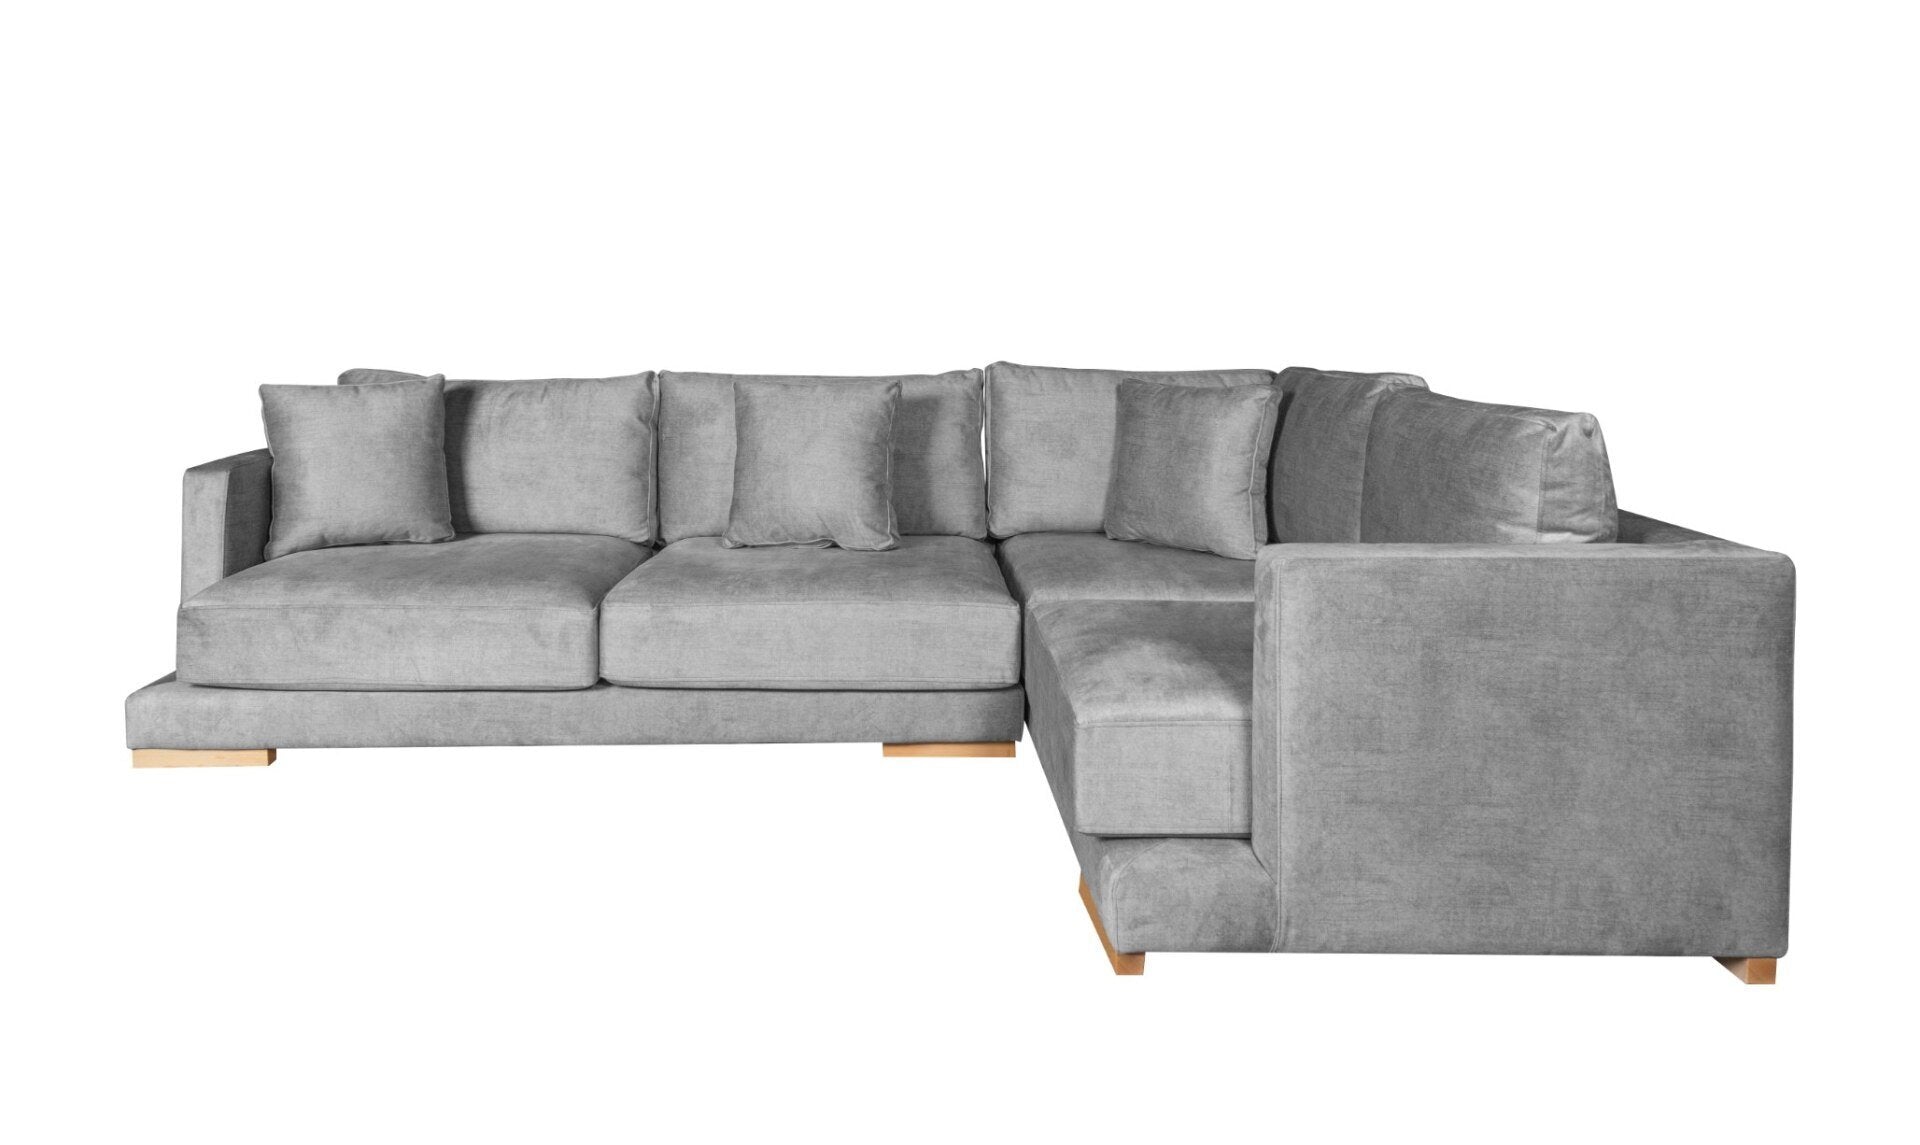 Sofa Rinconera Chaise Longue Ohio 300x200cm